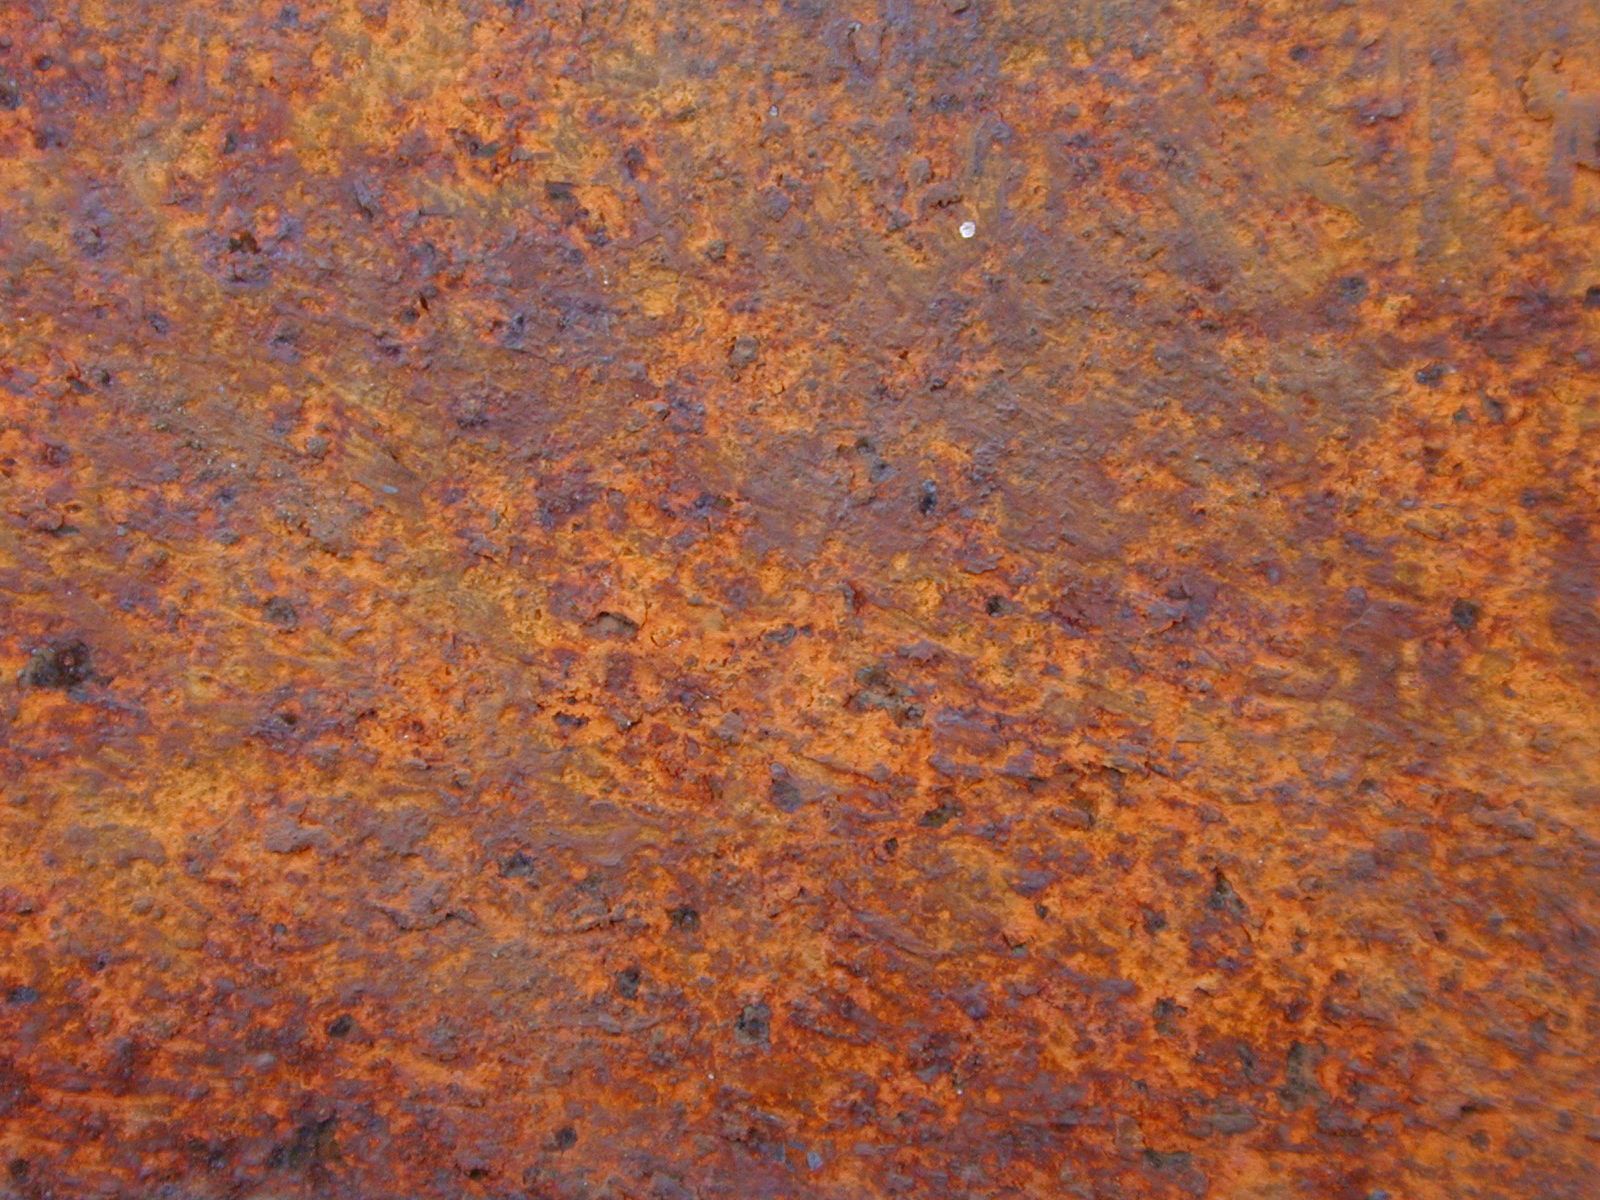 http://imageafter.com/image.php?image=b1rusta001.jpg metal rust ...